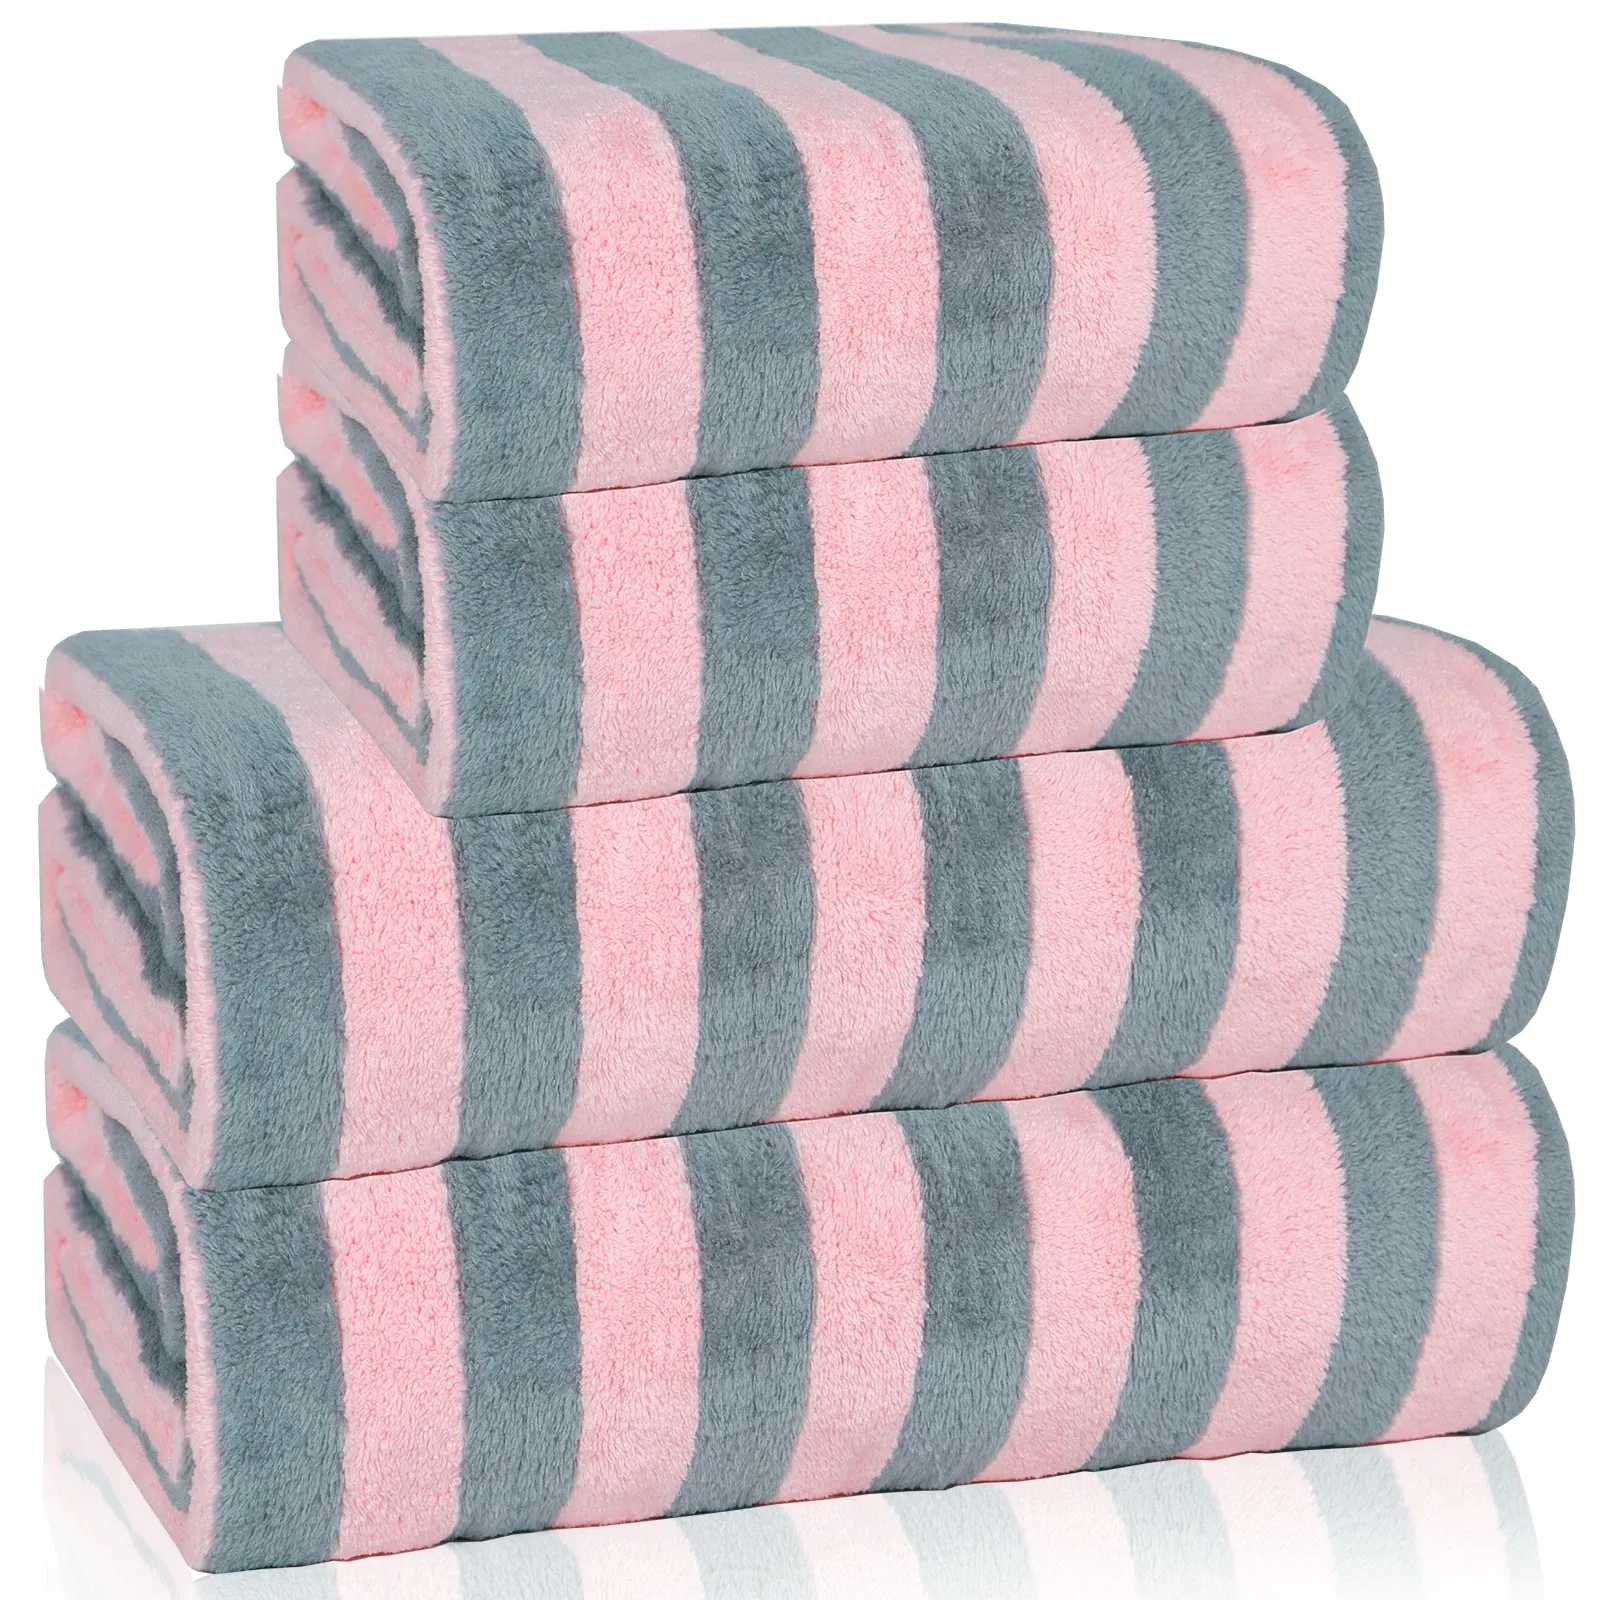 Asciugamani da 4 pari di asciugamani in microfibra set super assorbenti asciugamani leggero leggero leggero per piscina per bagno in spiaggia, palestra, hotel